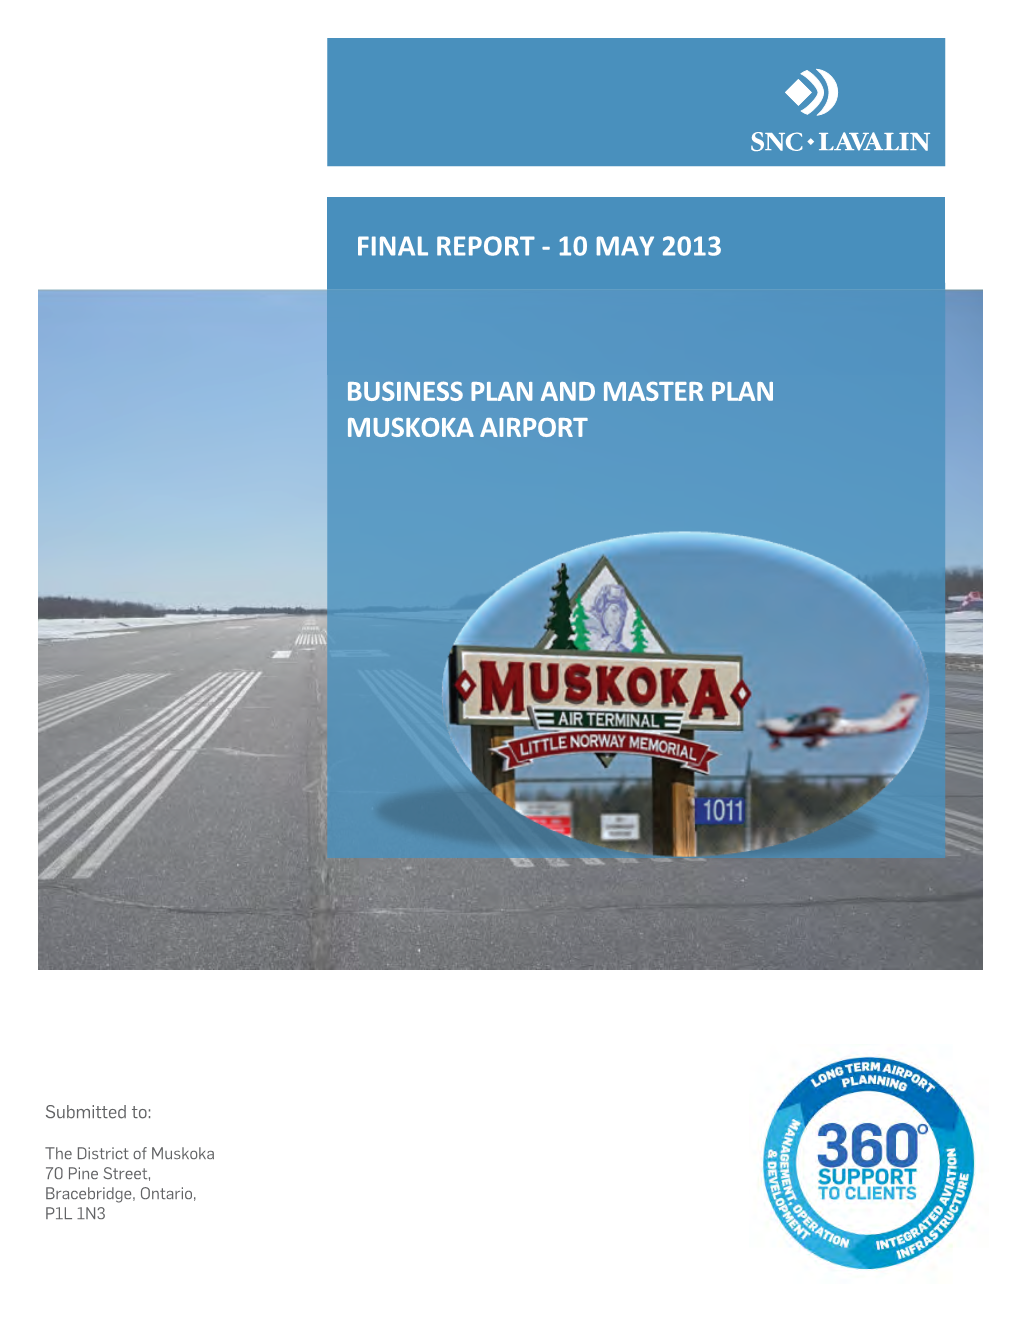 Business Plan and Master Plan Muskoka Airport Final